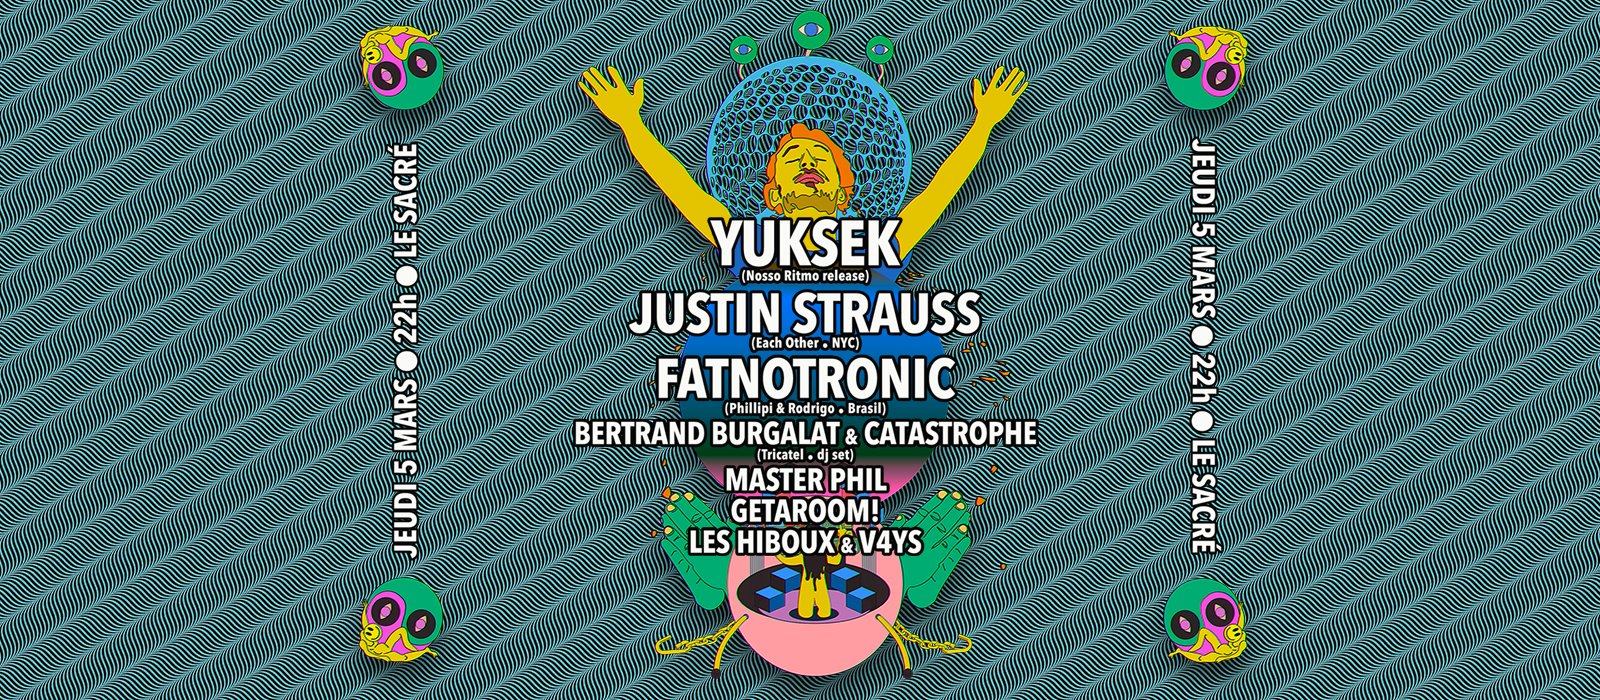 Yuksek organise un mini festival au Sacré, le jeudi 5 mars 2020